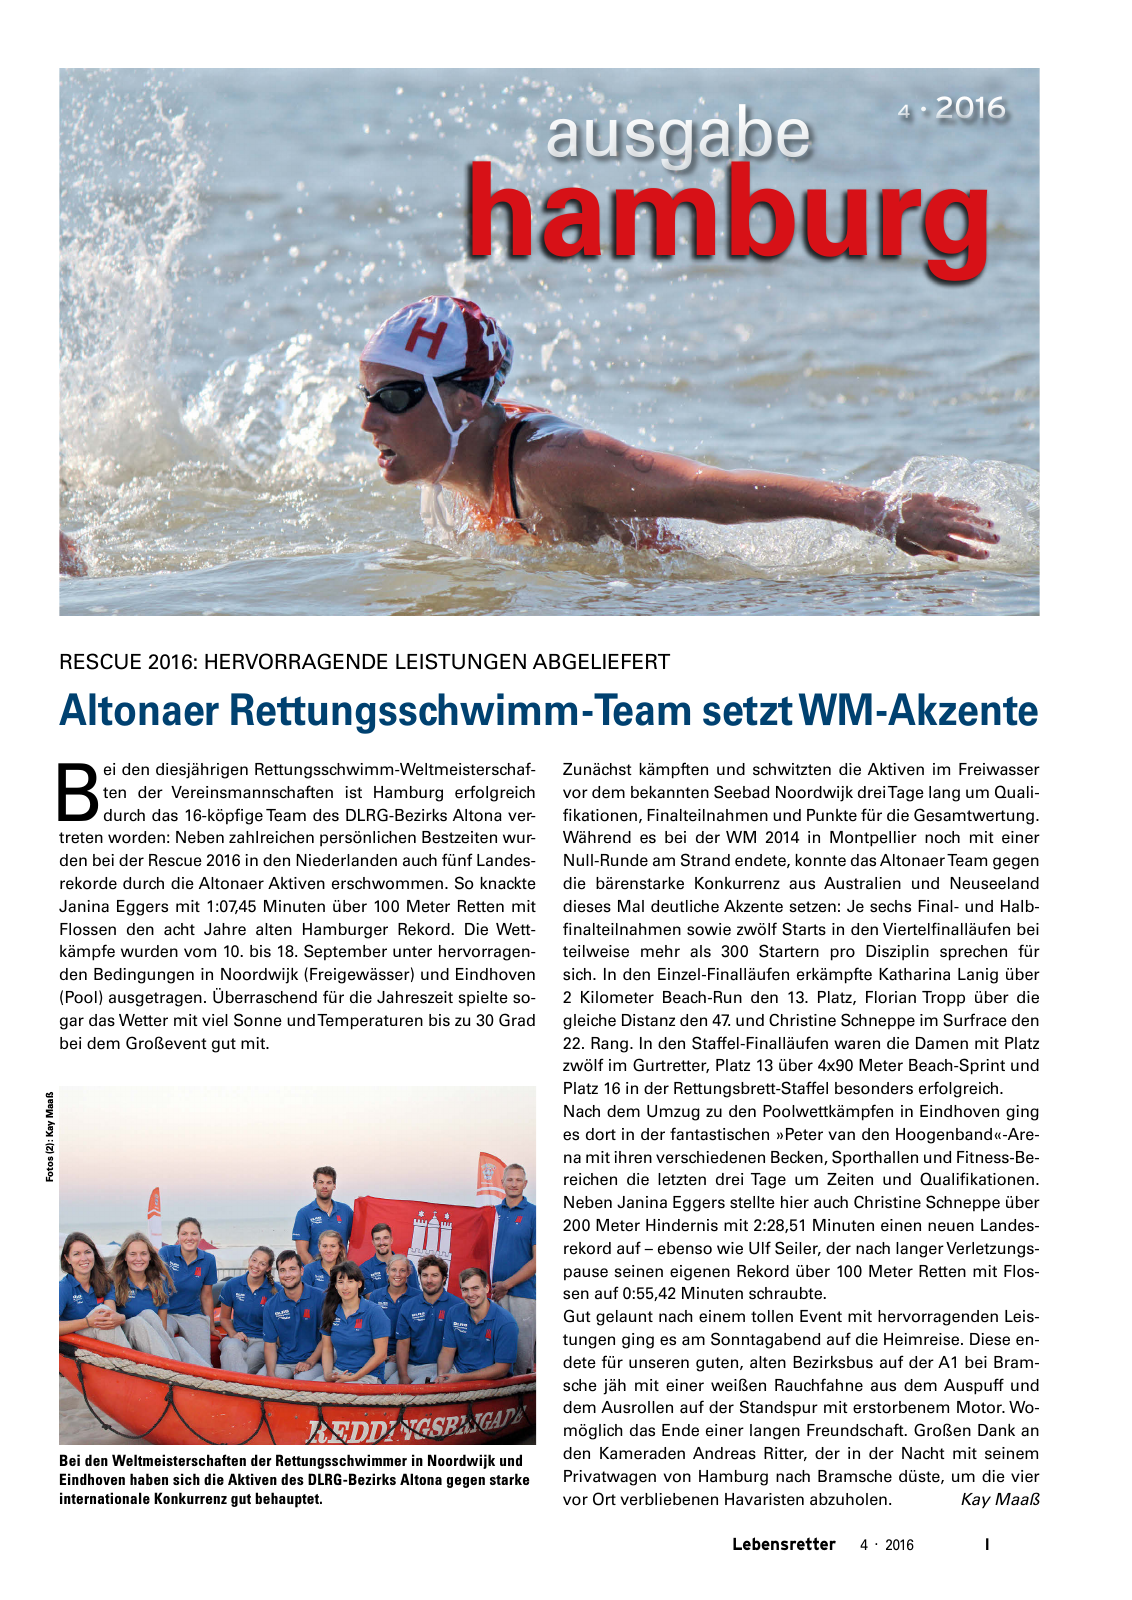 Vorschau Lebensretter 4/2016 - Regionalausgabe Hamburg Seite 3